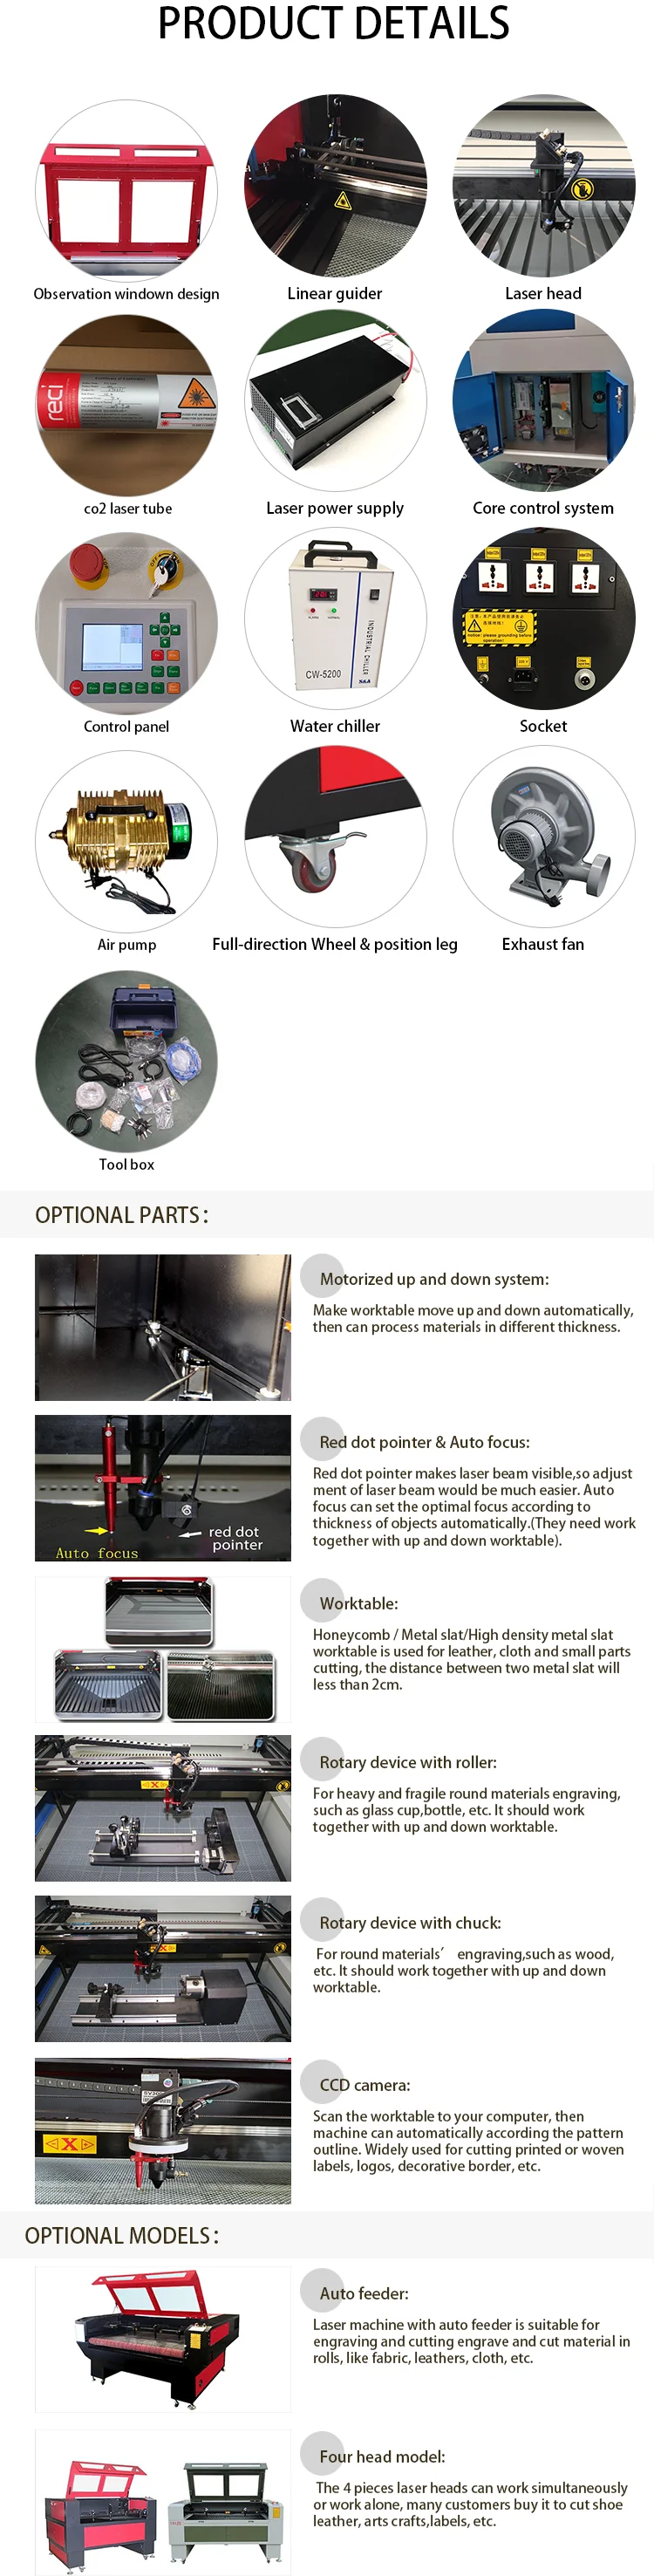 High quality garment laser cutting machine TS1490 CO2 laser cutting and engraving machine